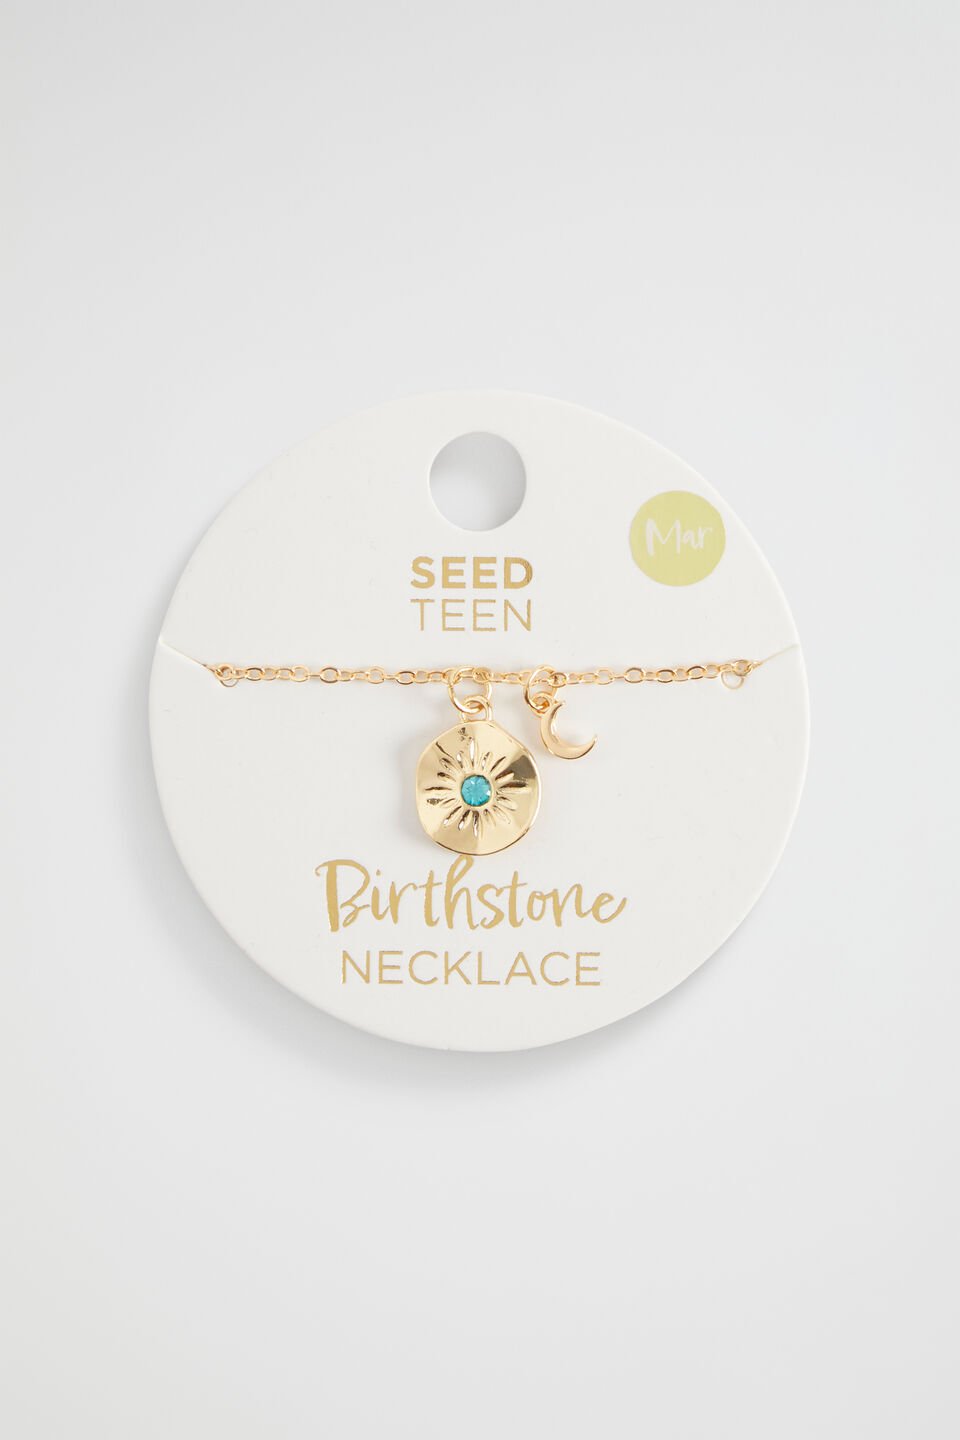 Birthstone Necklace  March